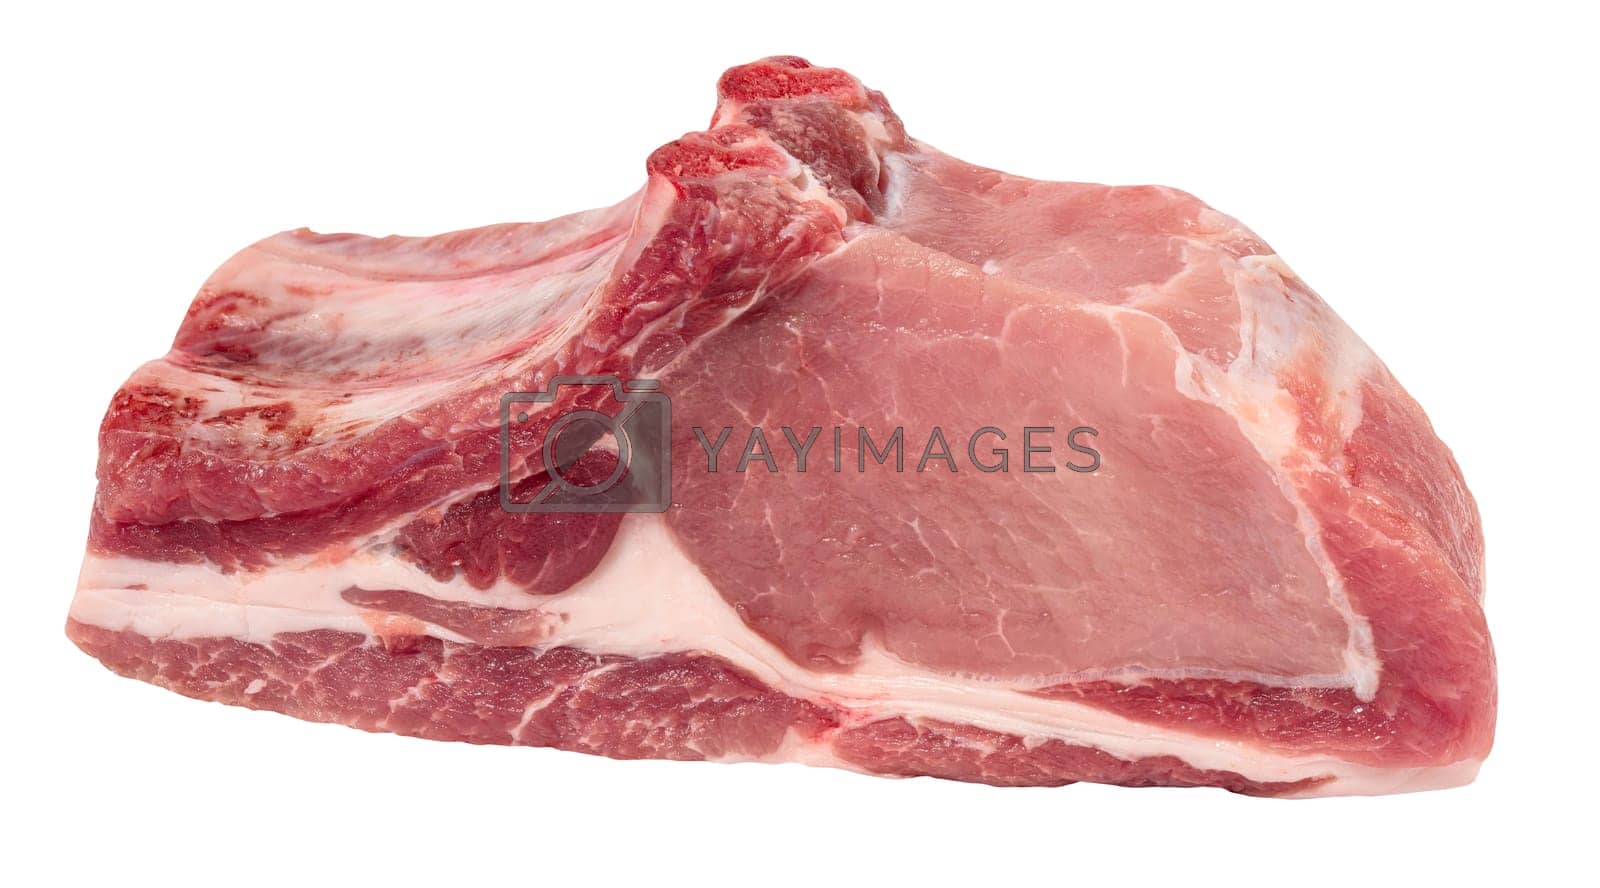 Royalty free image of Raw pork steak on the bone isolated on white background by ndanko